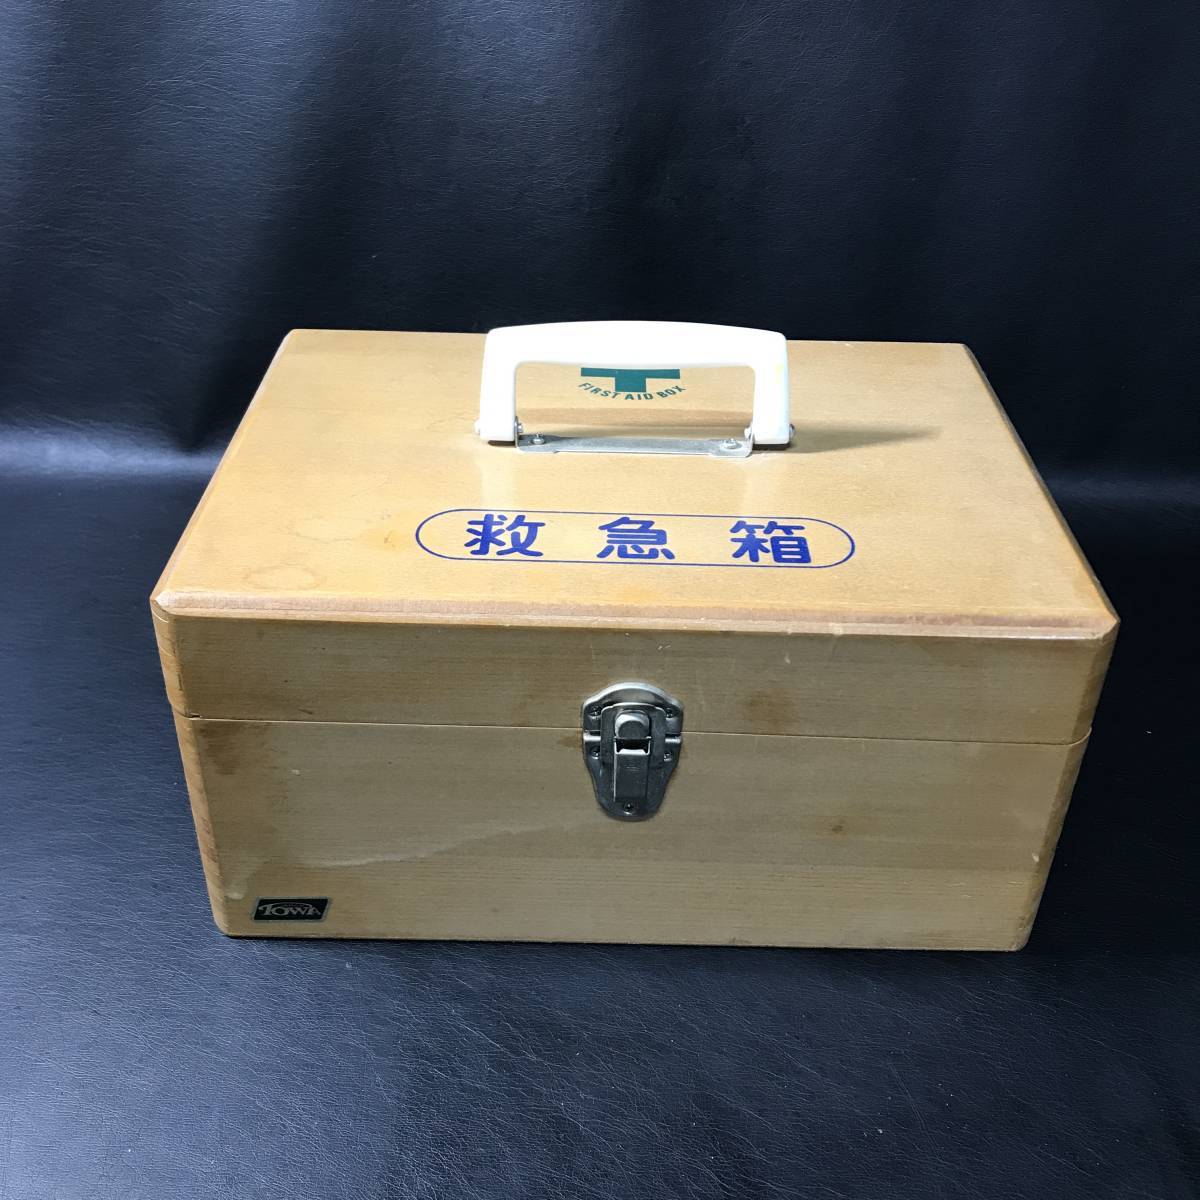 NSD JAPAN TOWA Showa Retro first-aid kit FIRST AID BOX JAPAN VINTAGE